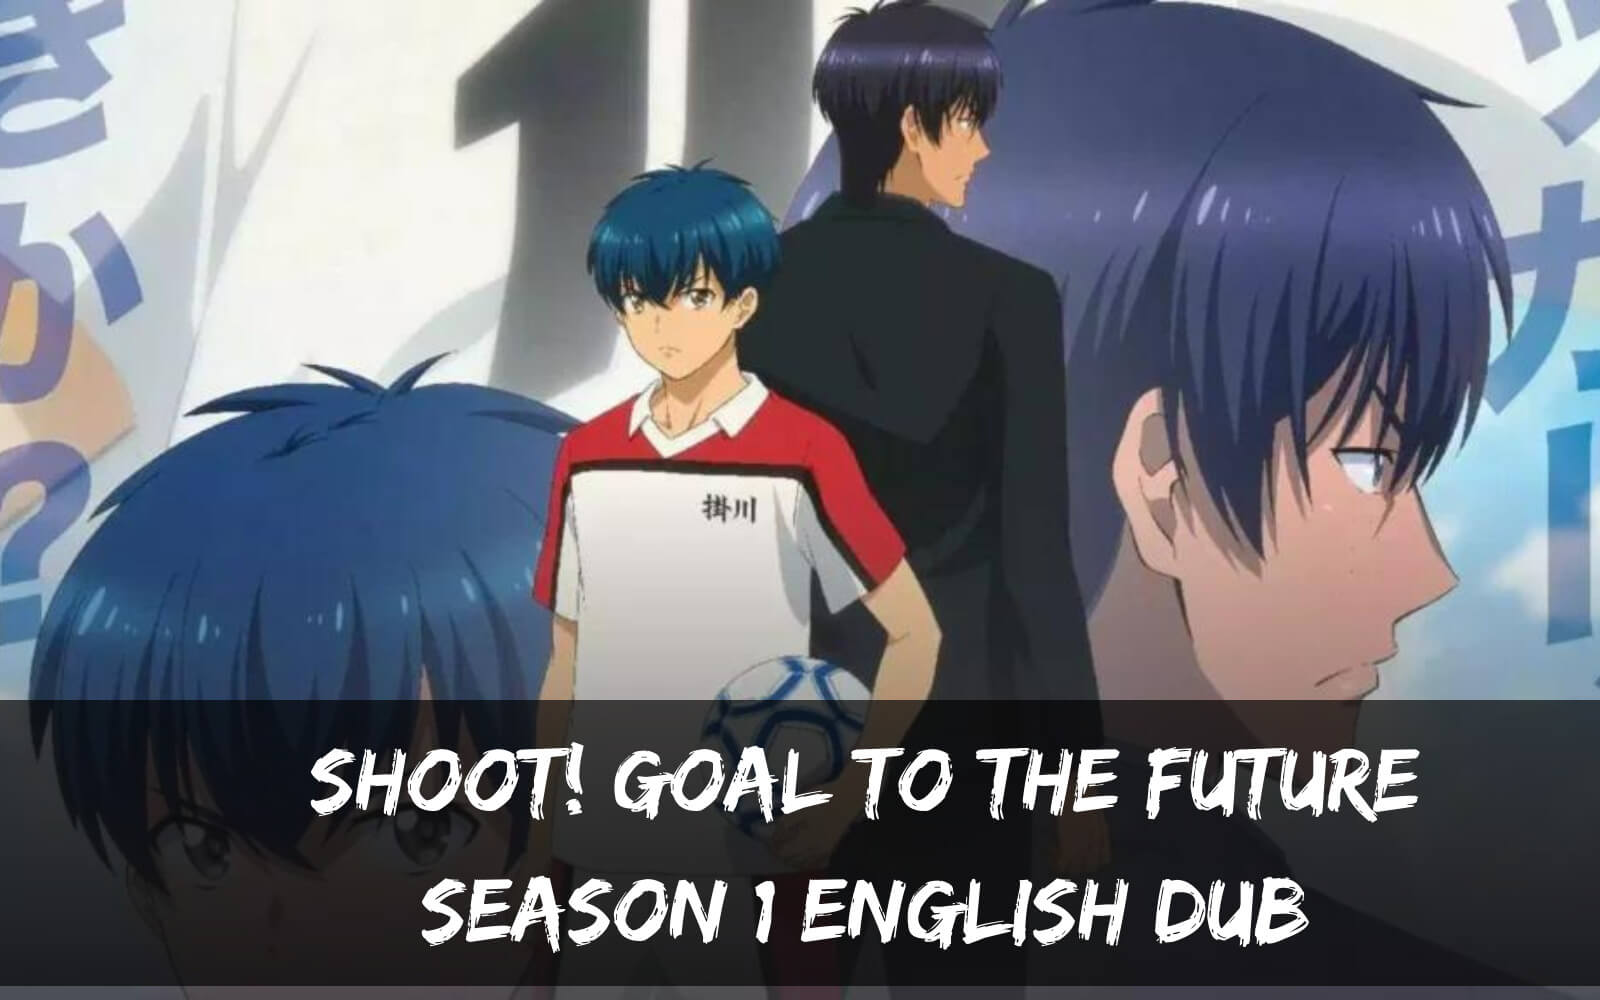 Shoot! Goal To The Future season 1 English Dub release date